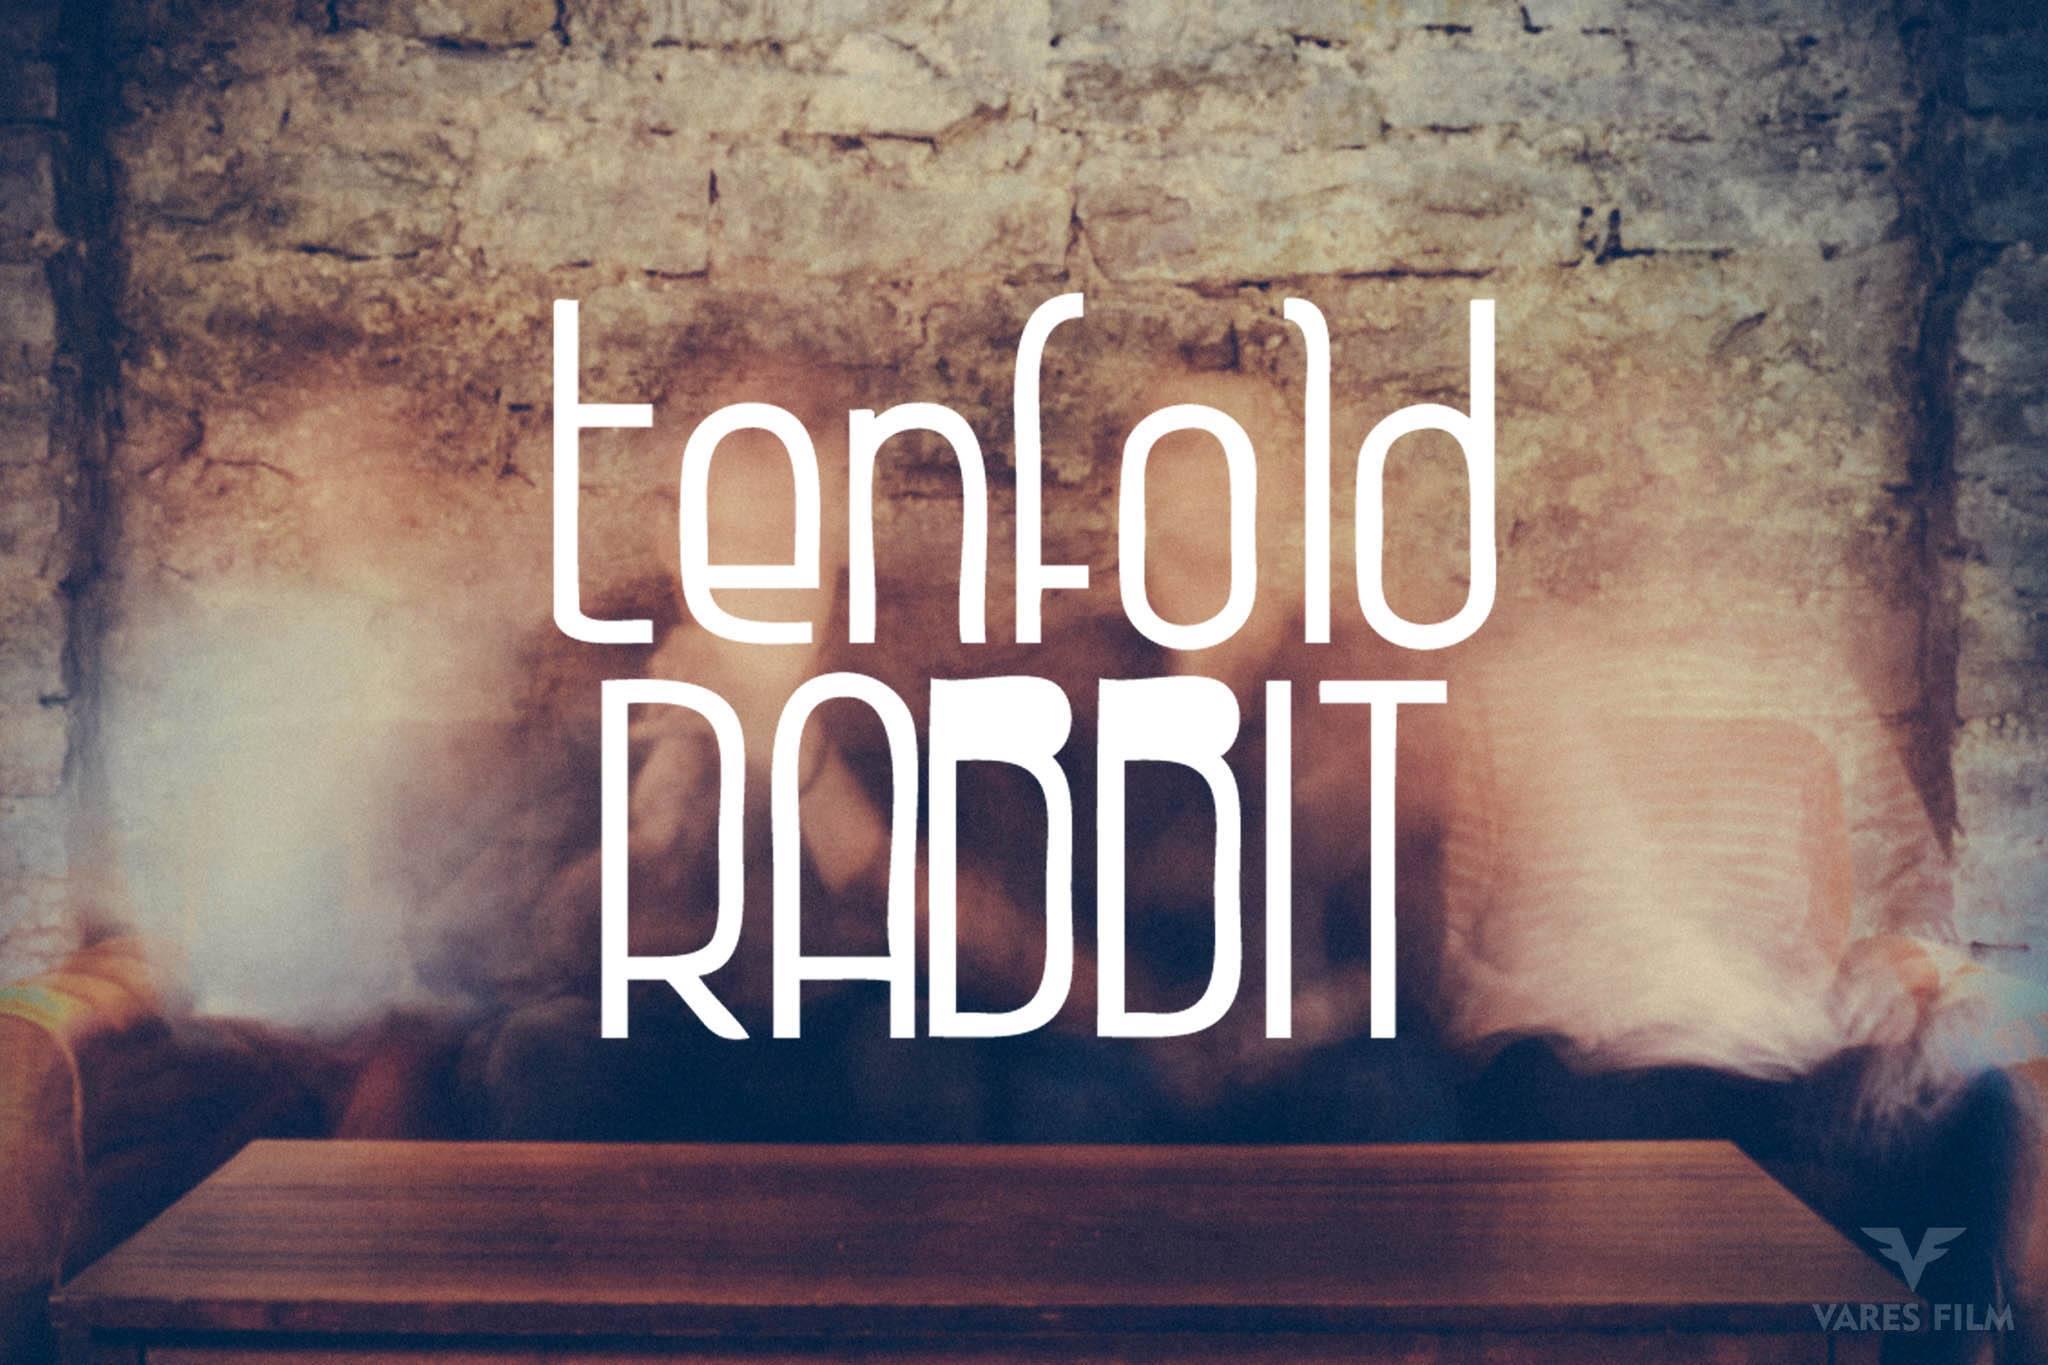 Tenfold Rabbit